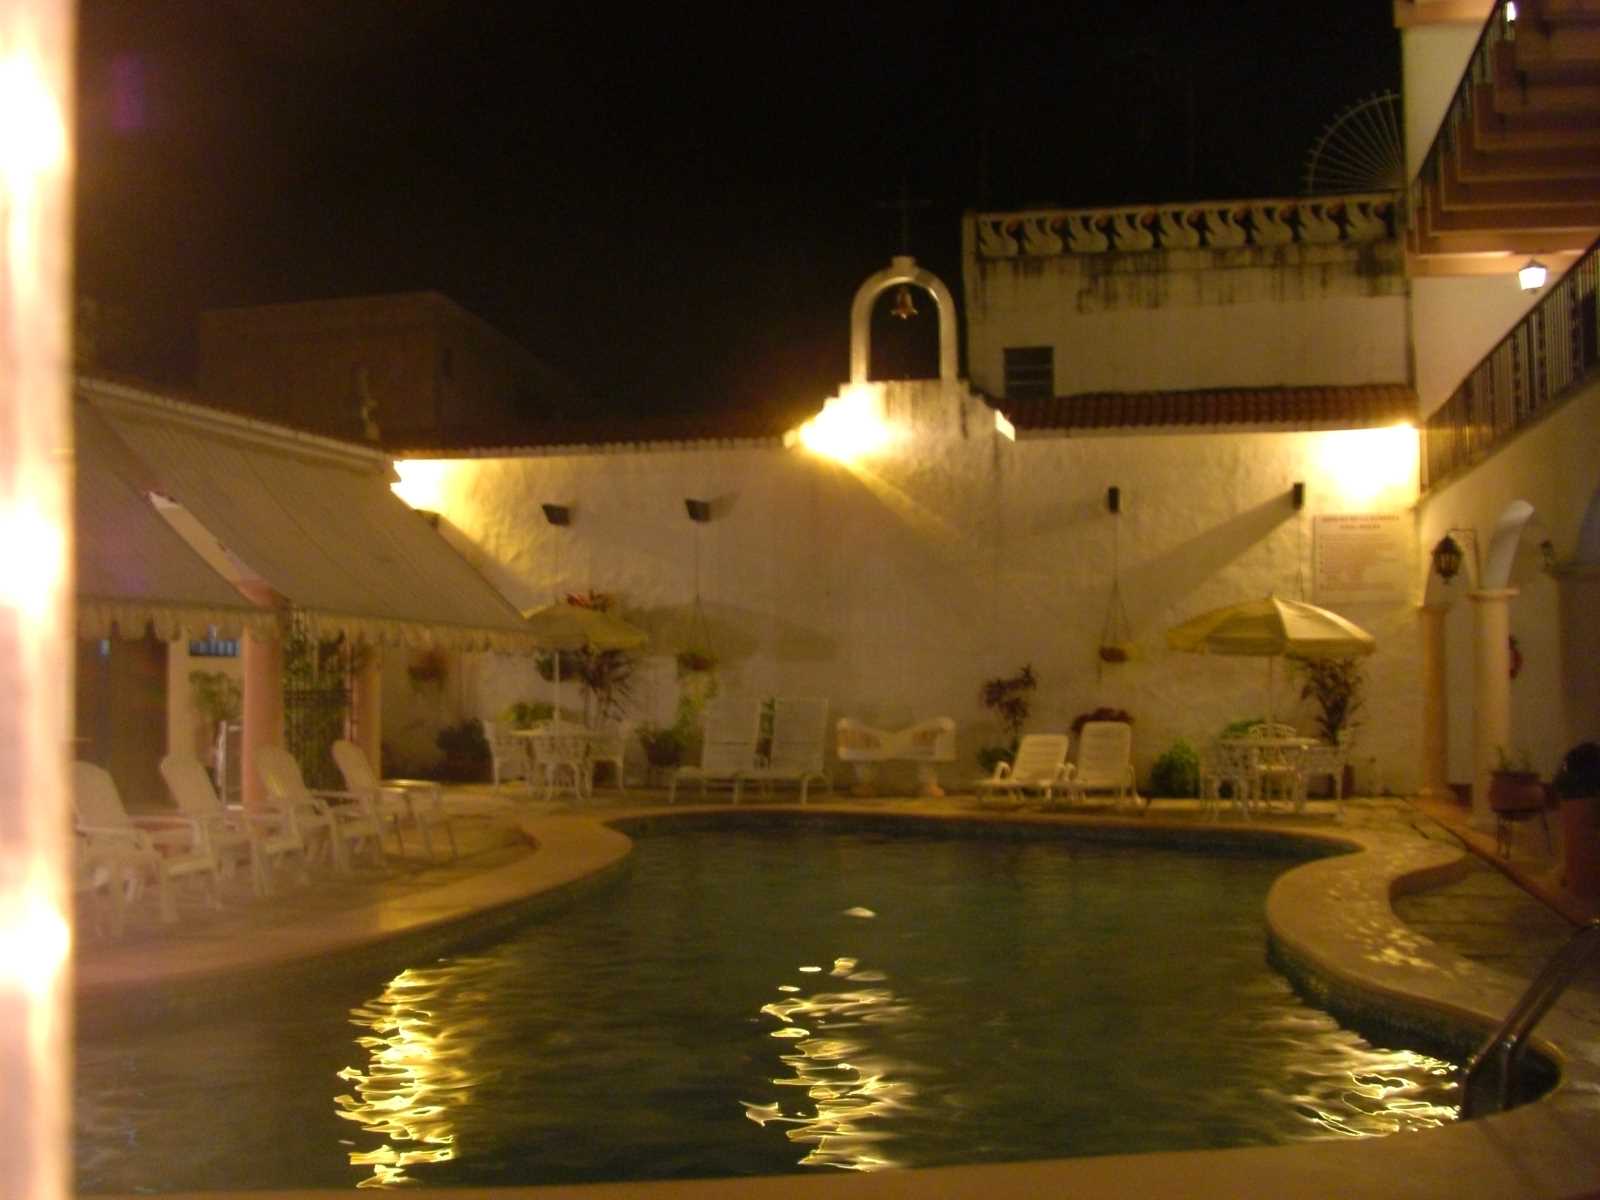 CIMG17
41 hotel pool
